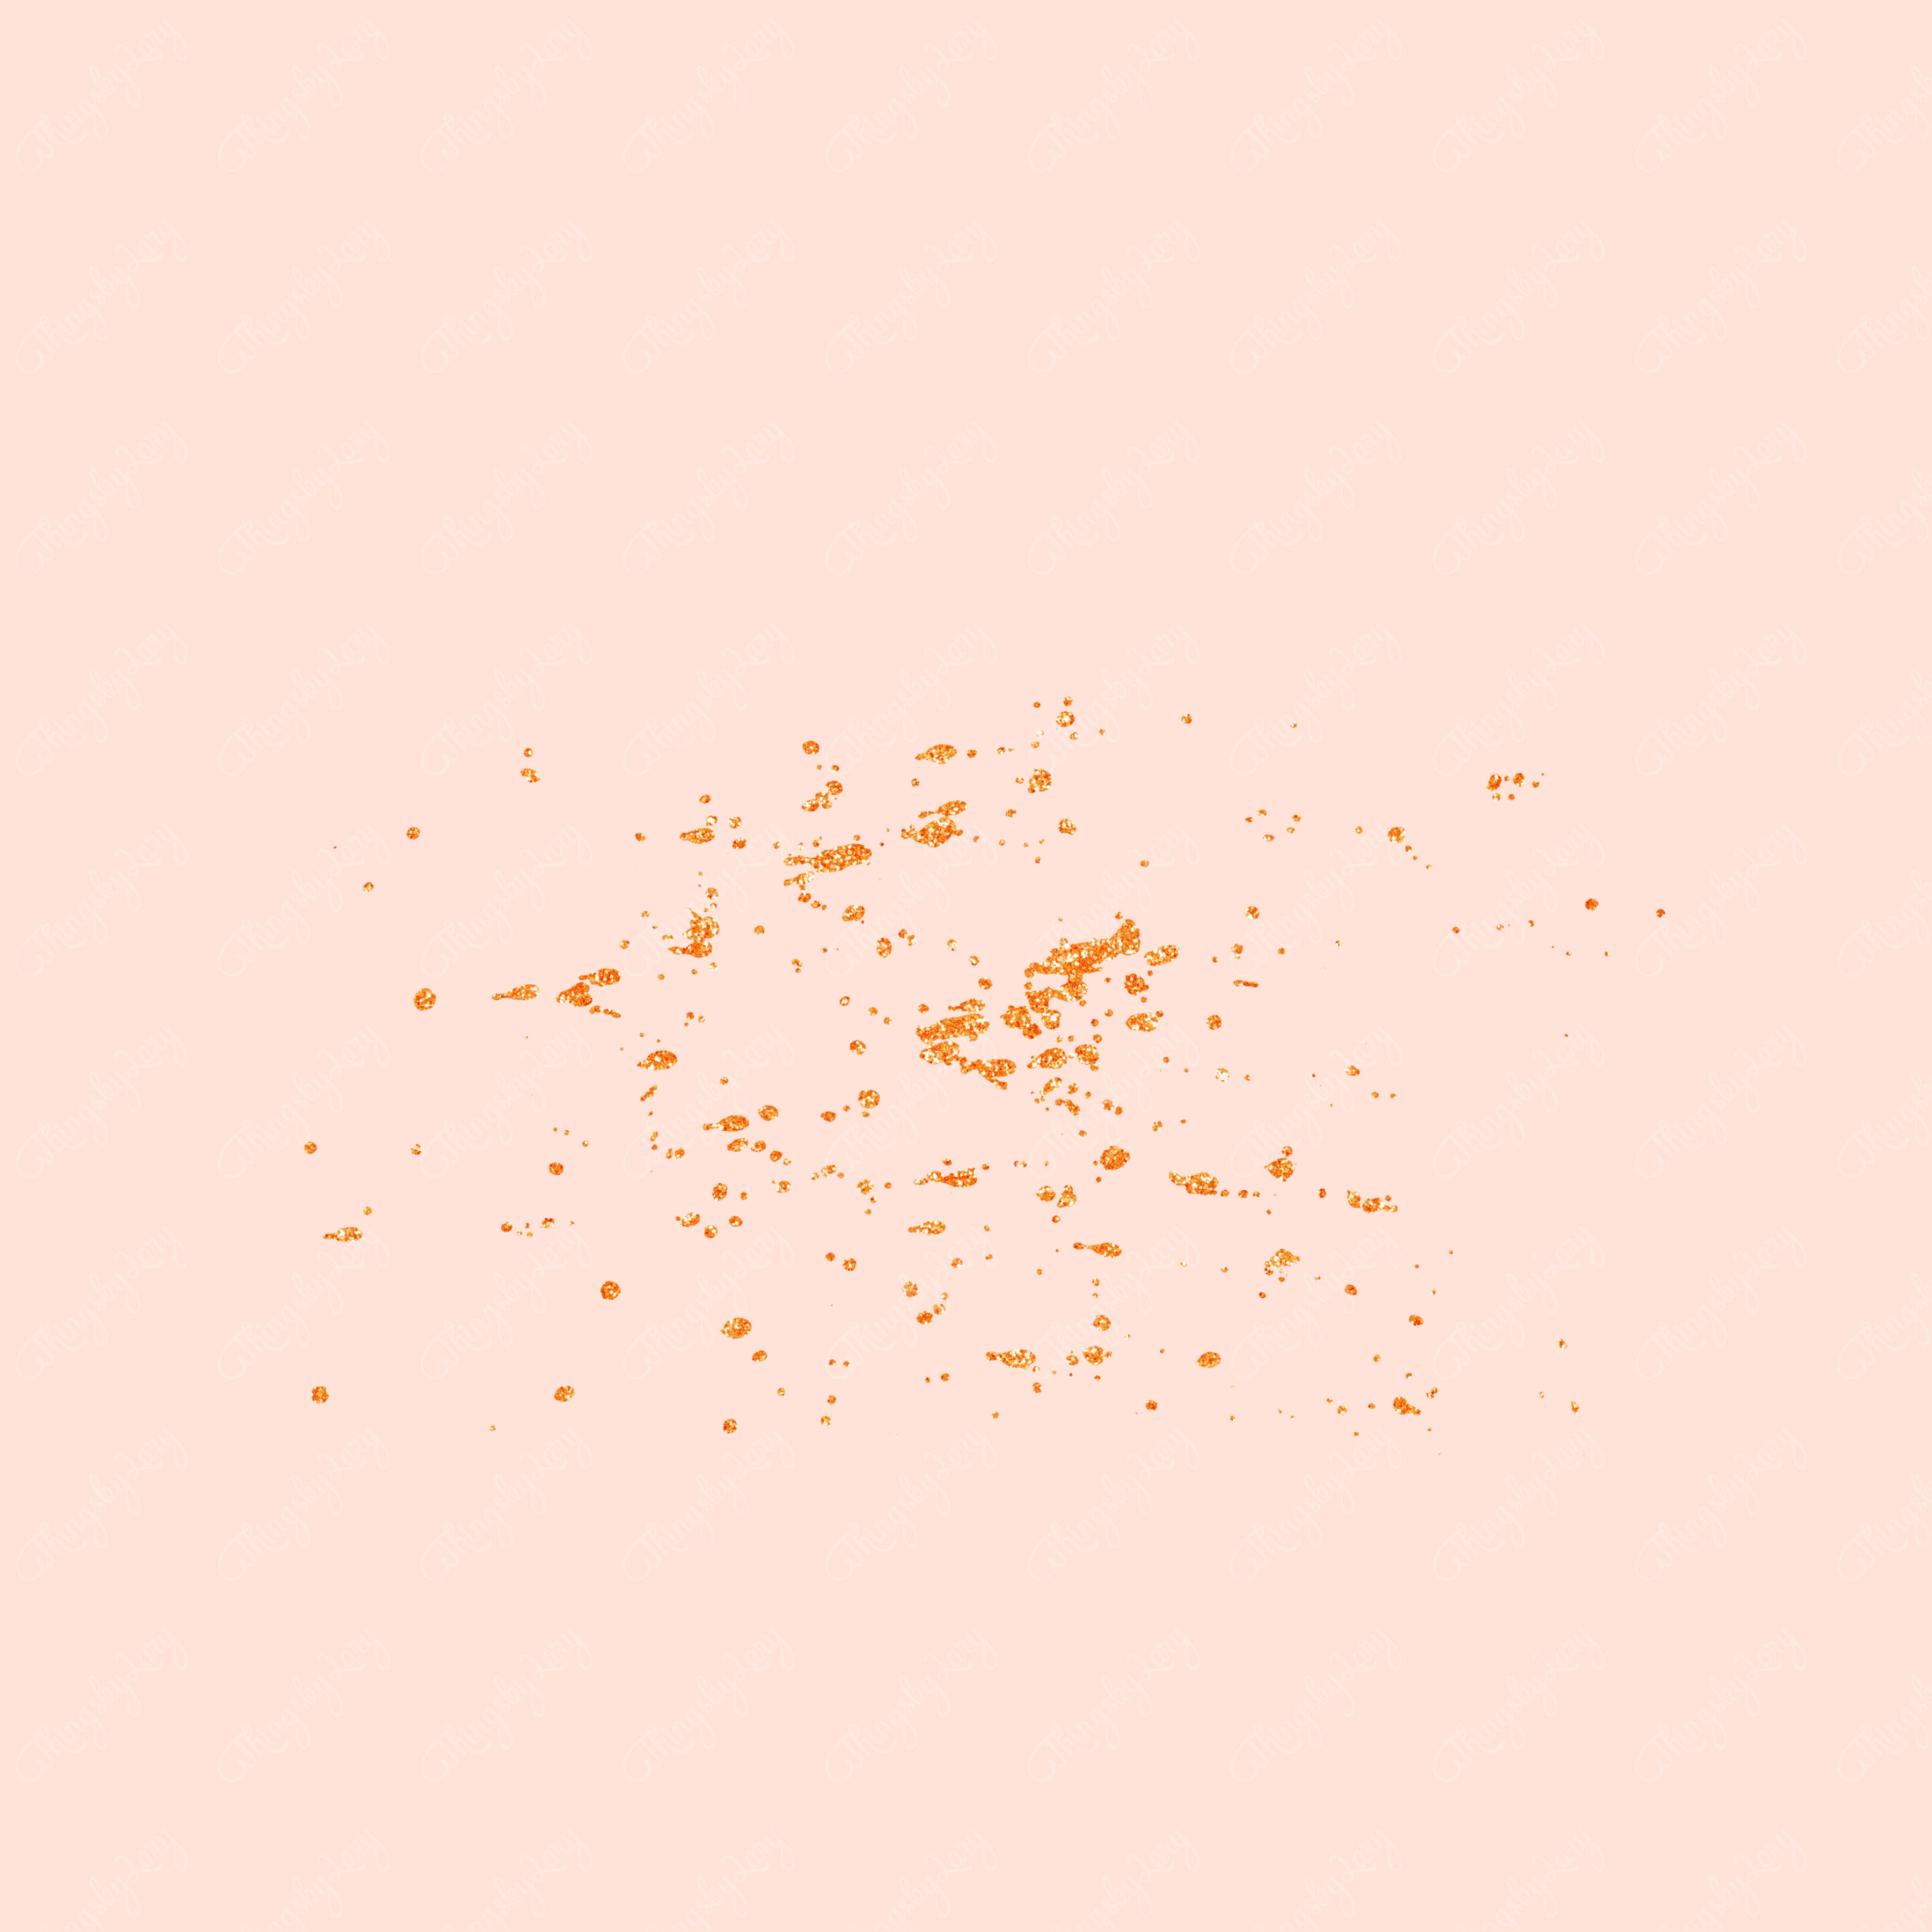 70 Orange Glitter Particles Set PNG Overlay Images